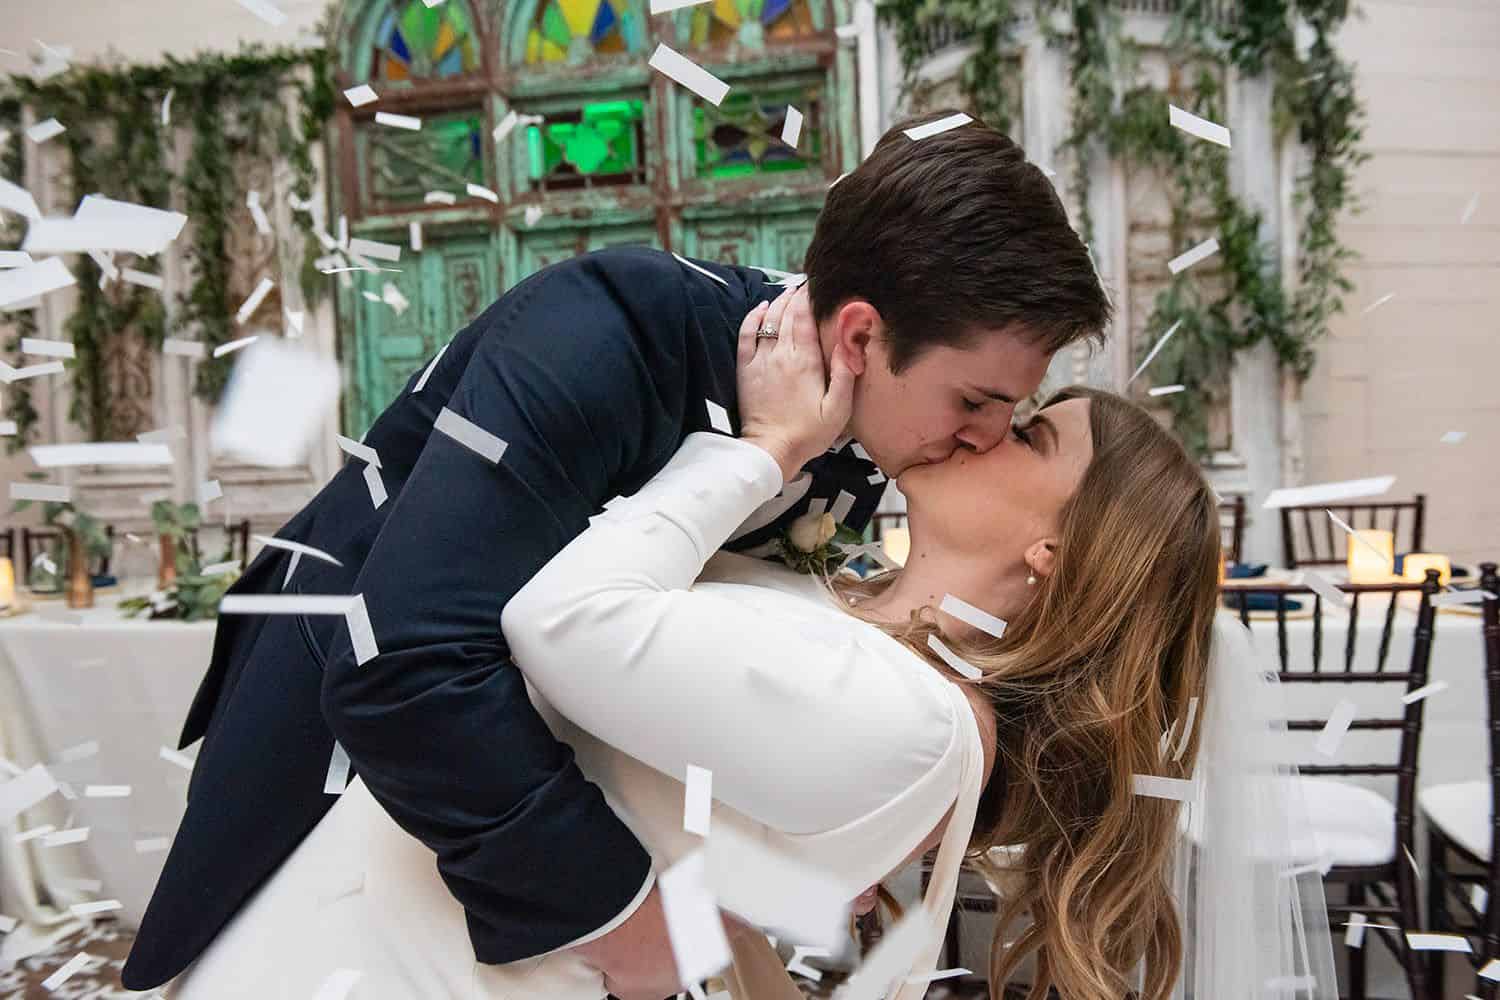 A groom dips a bride for a kiss as confetti rains down on them